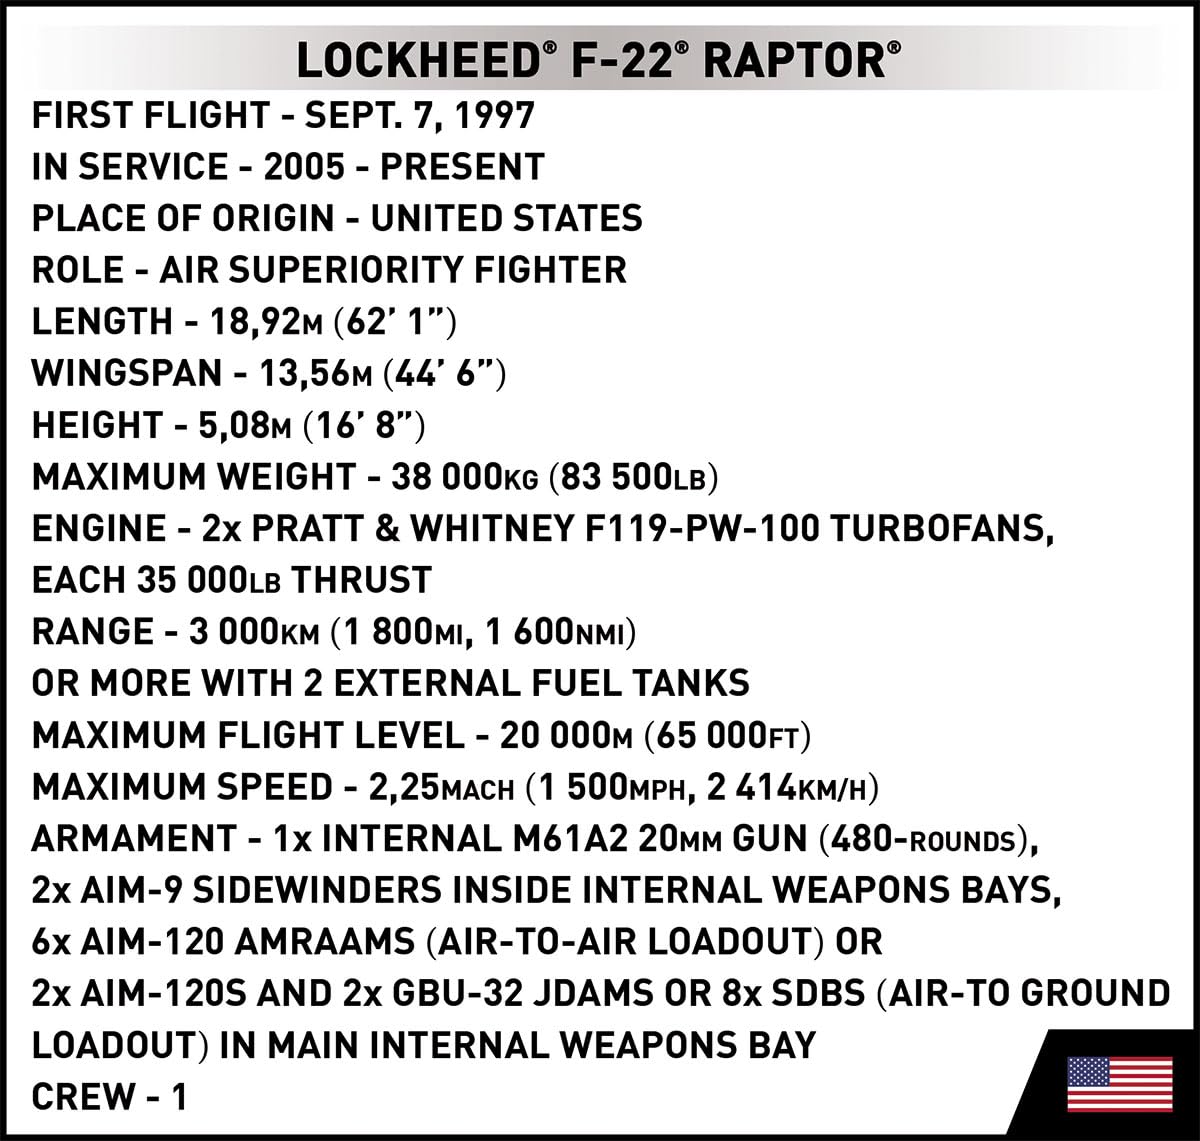 COBI Armed Forces Lockheed F-22 Raptor